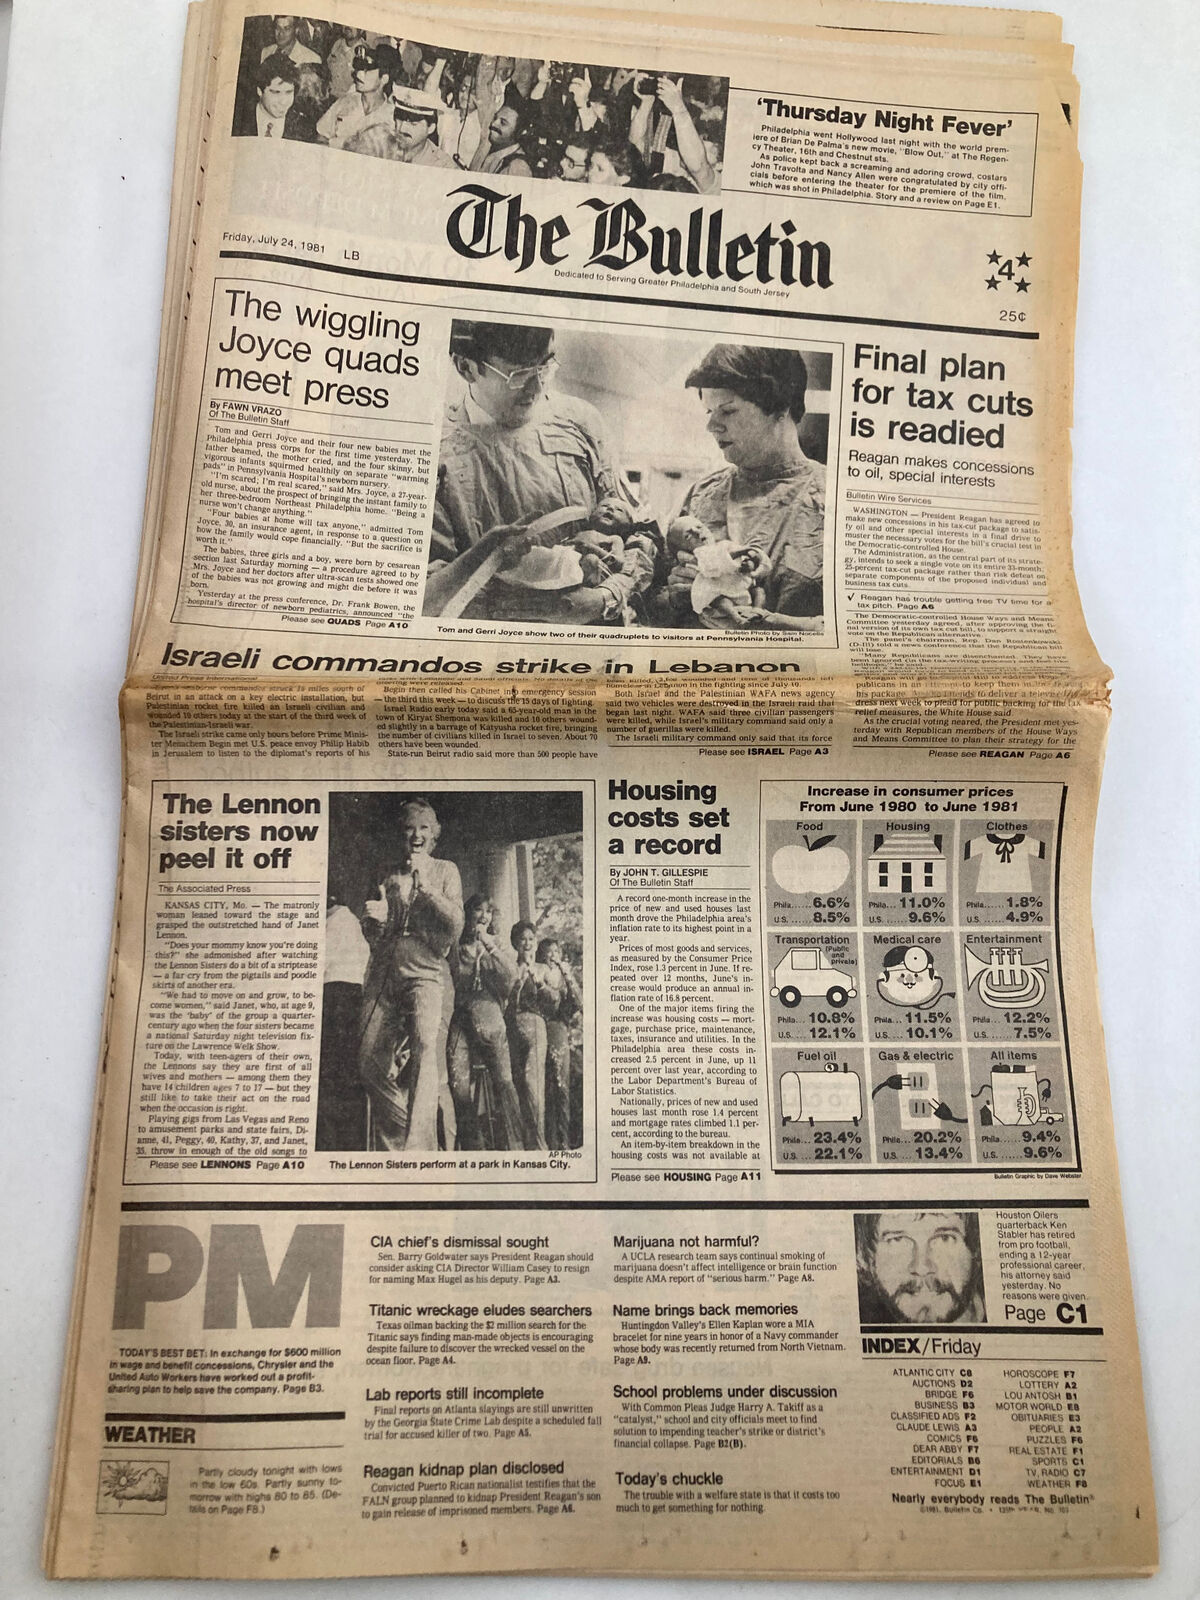 The Bulletin Newspaper July 24 1981 The Wiggling Joyce Quads Meets Press